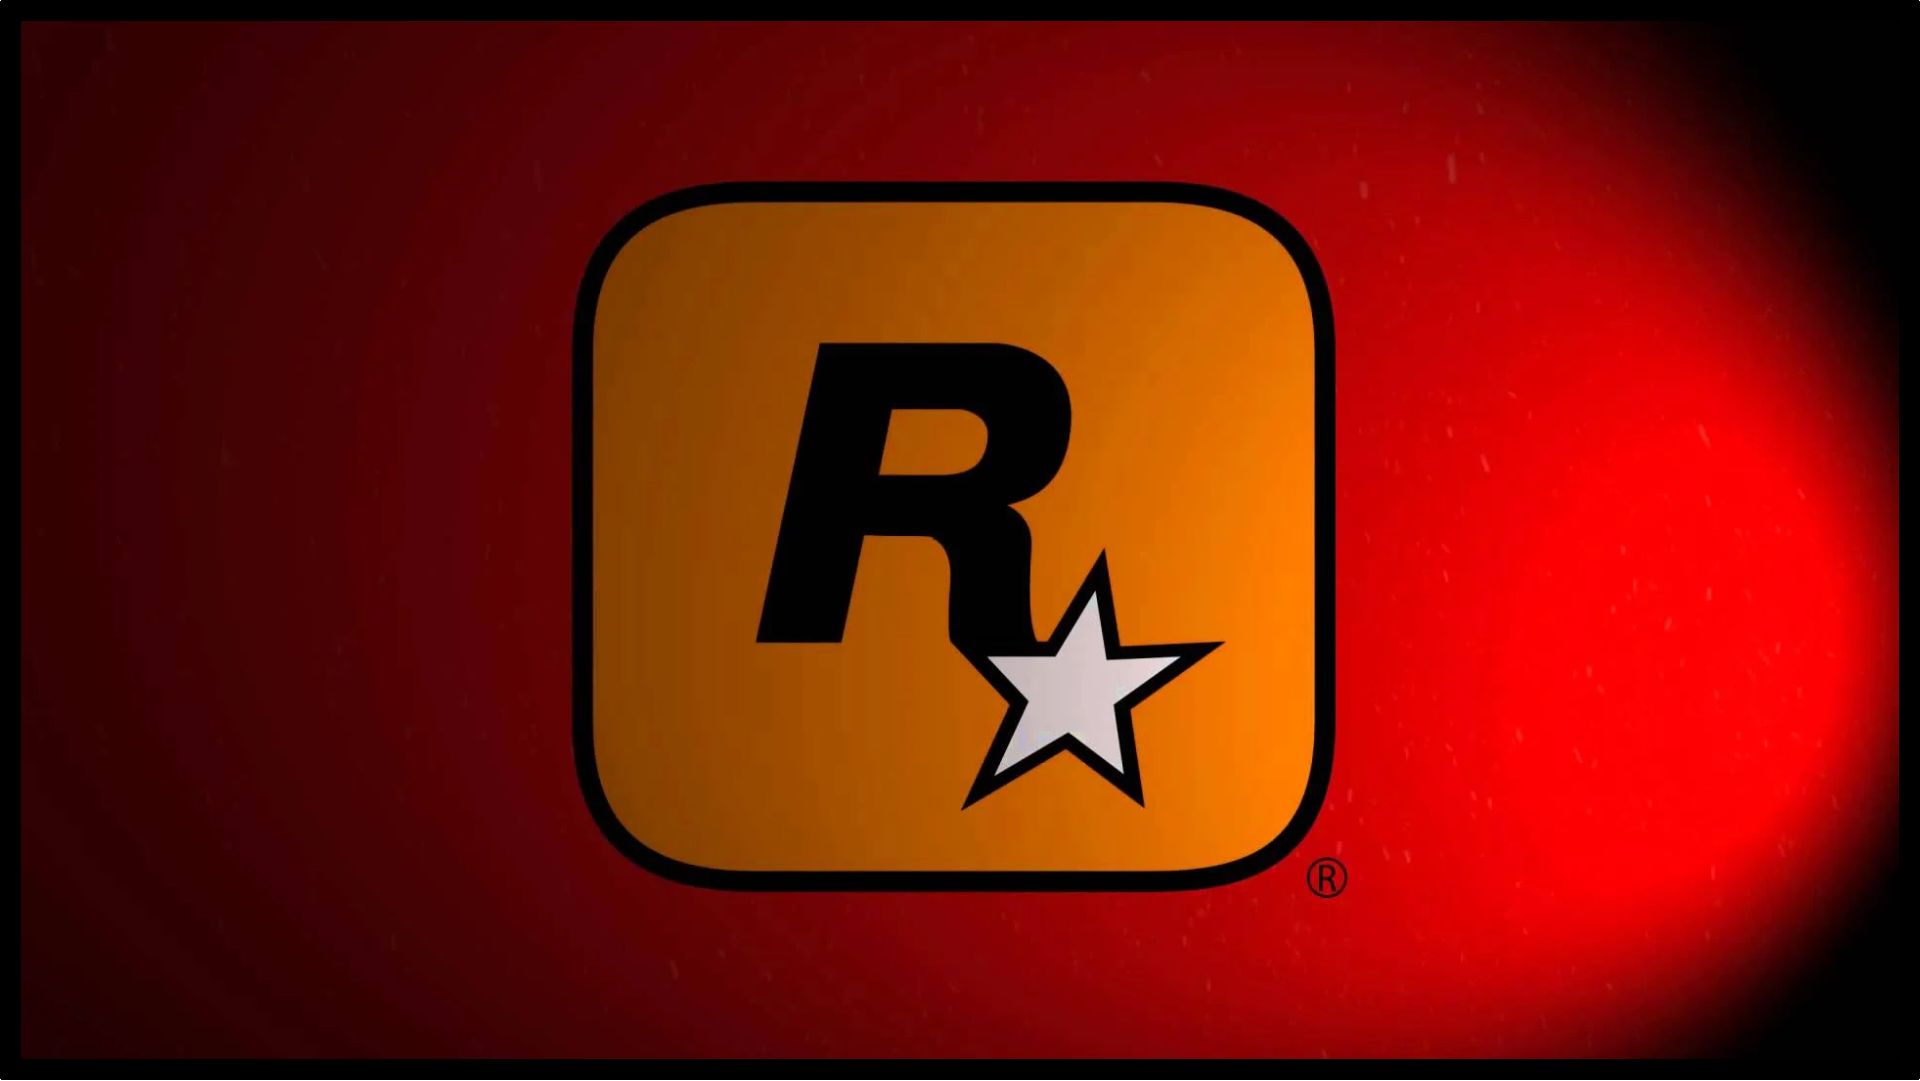 Rockstar games 134